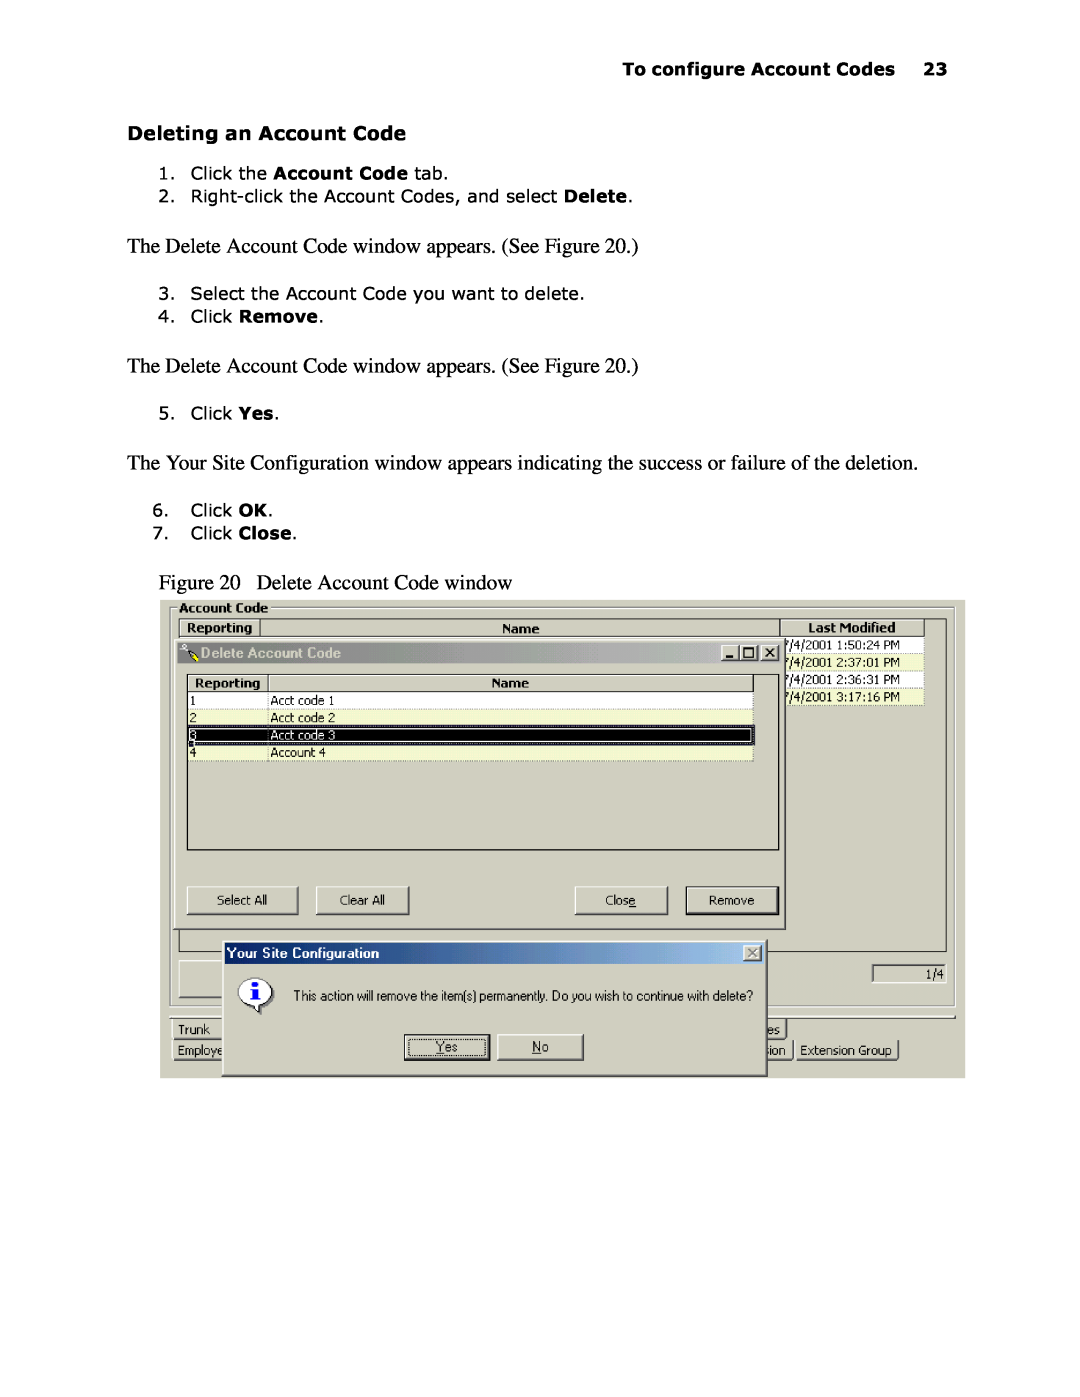 Mitel 6150 MCC manual The Delete Account Code window appears. See Figure 